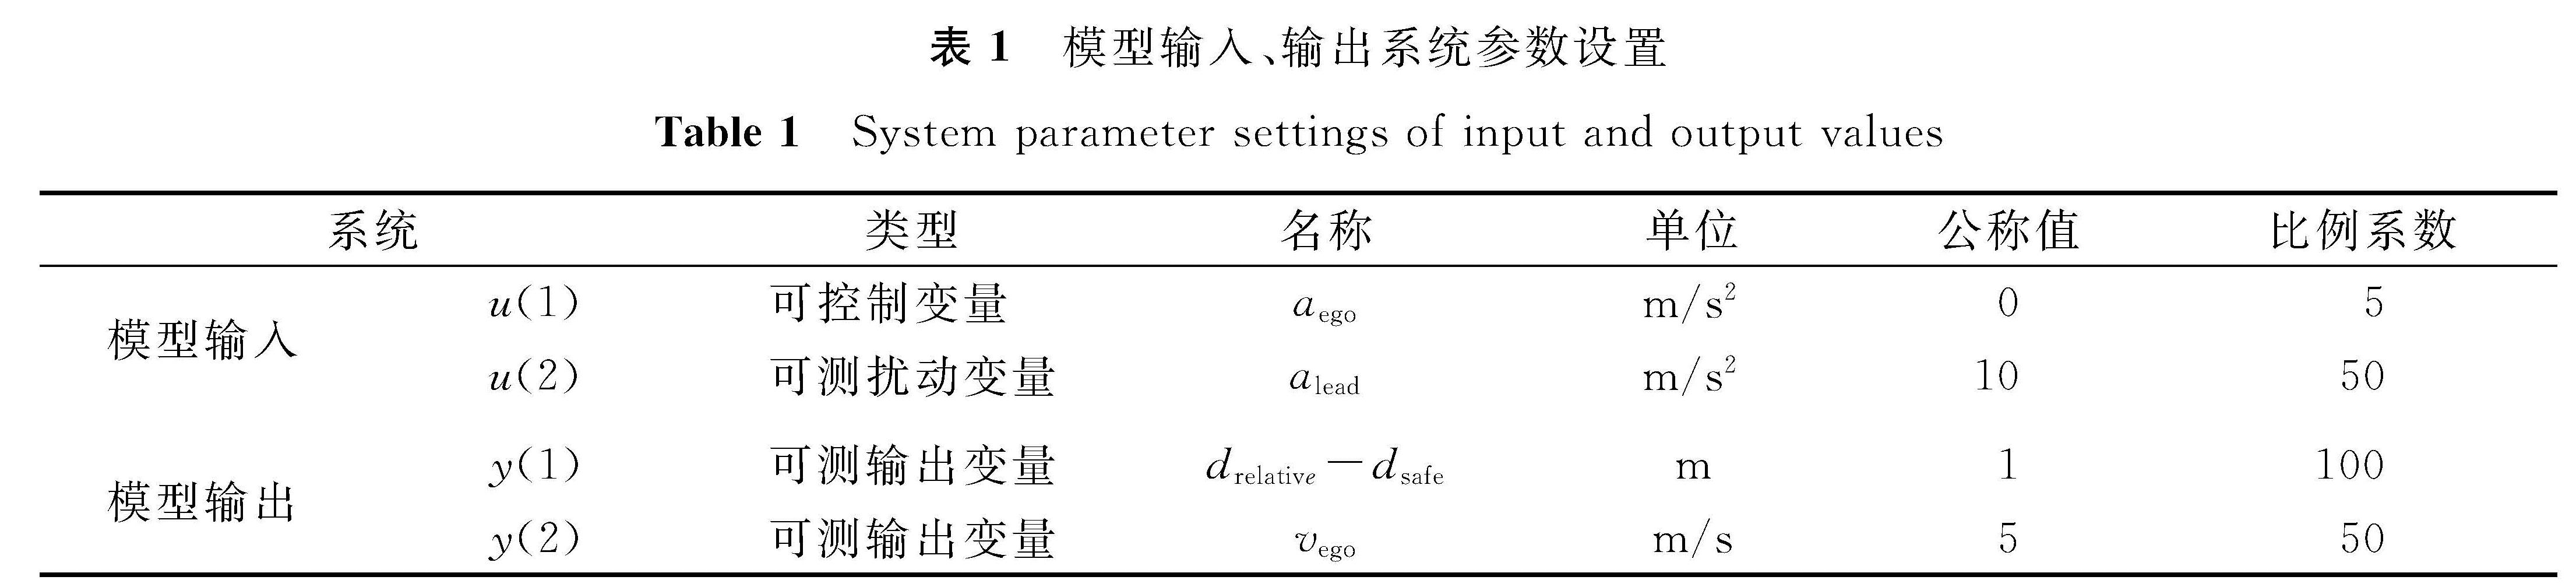 表1 模型输入、输出系统参数设置<br/>Table 1 System parameter settings of input and output values